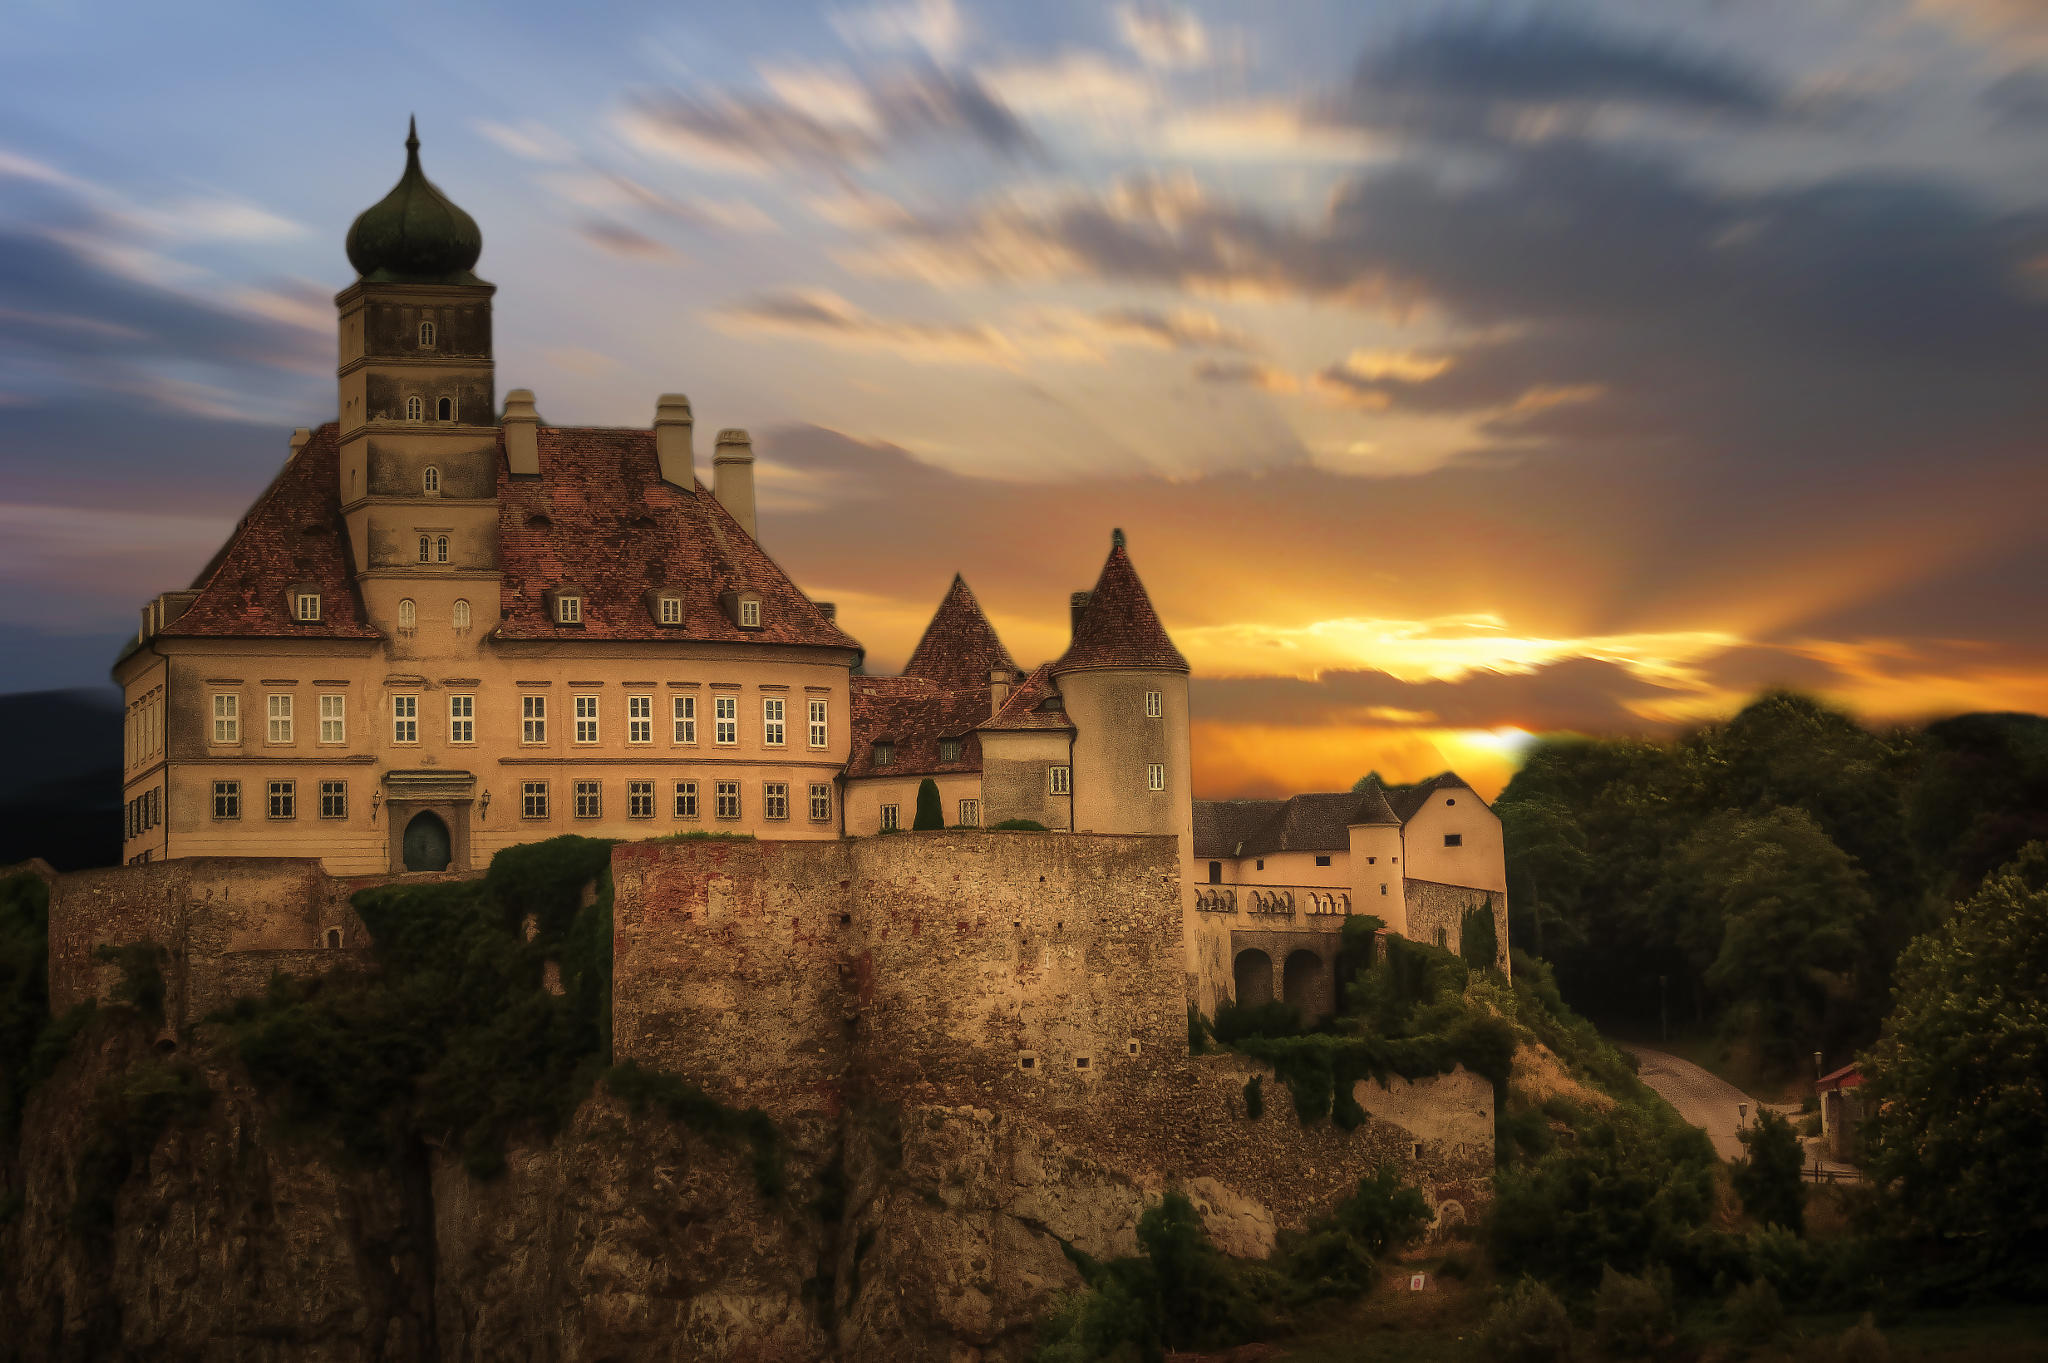 The Castle at Danube